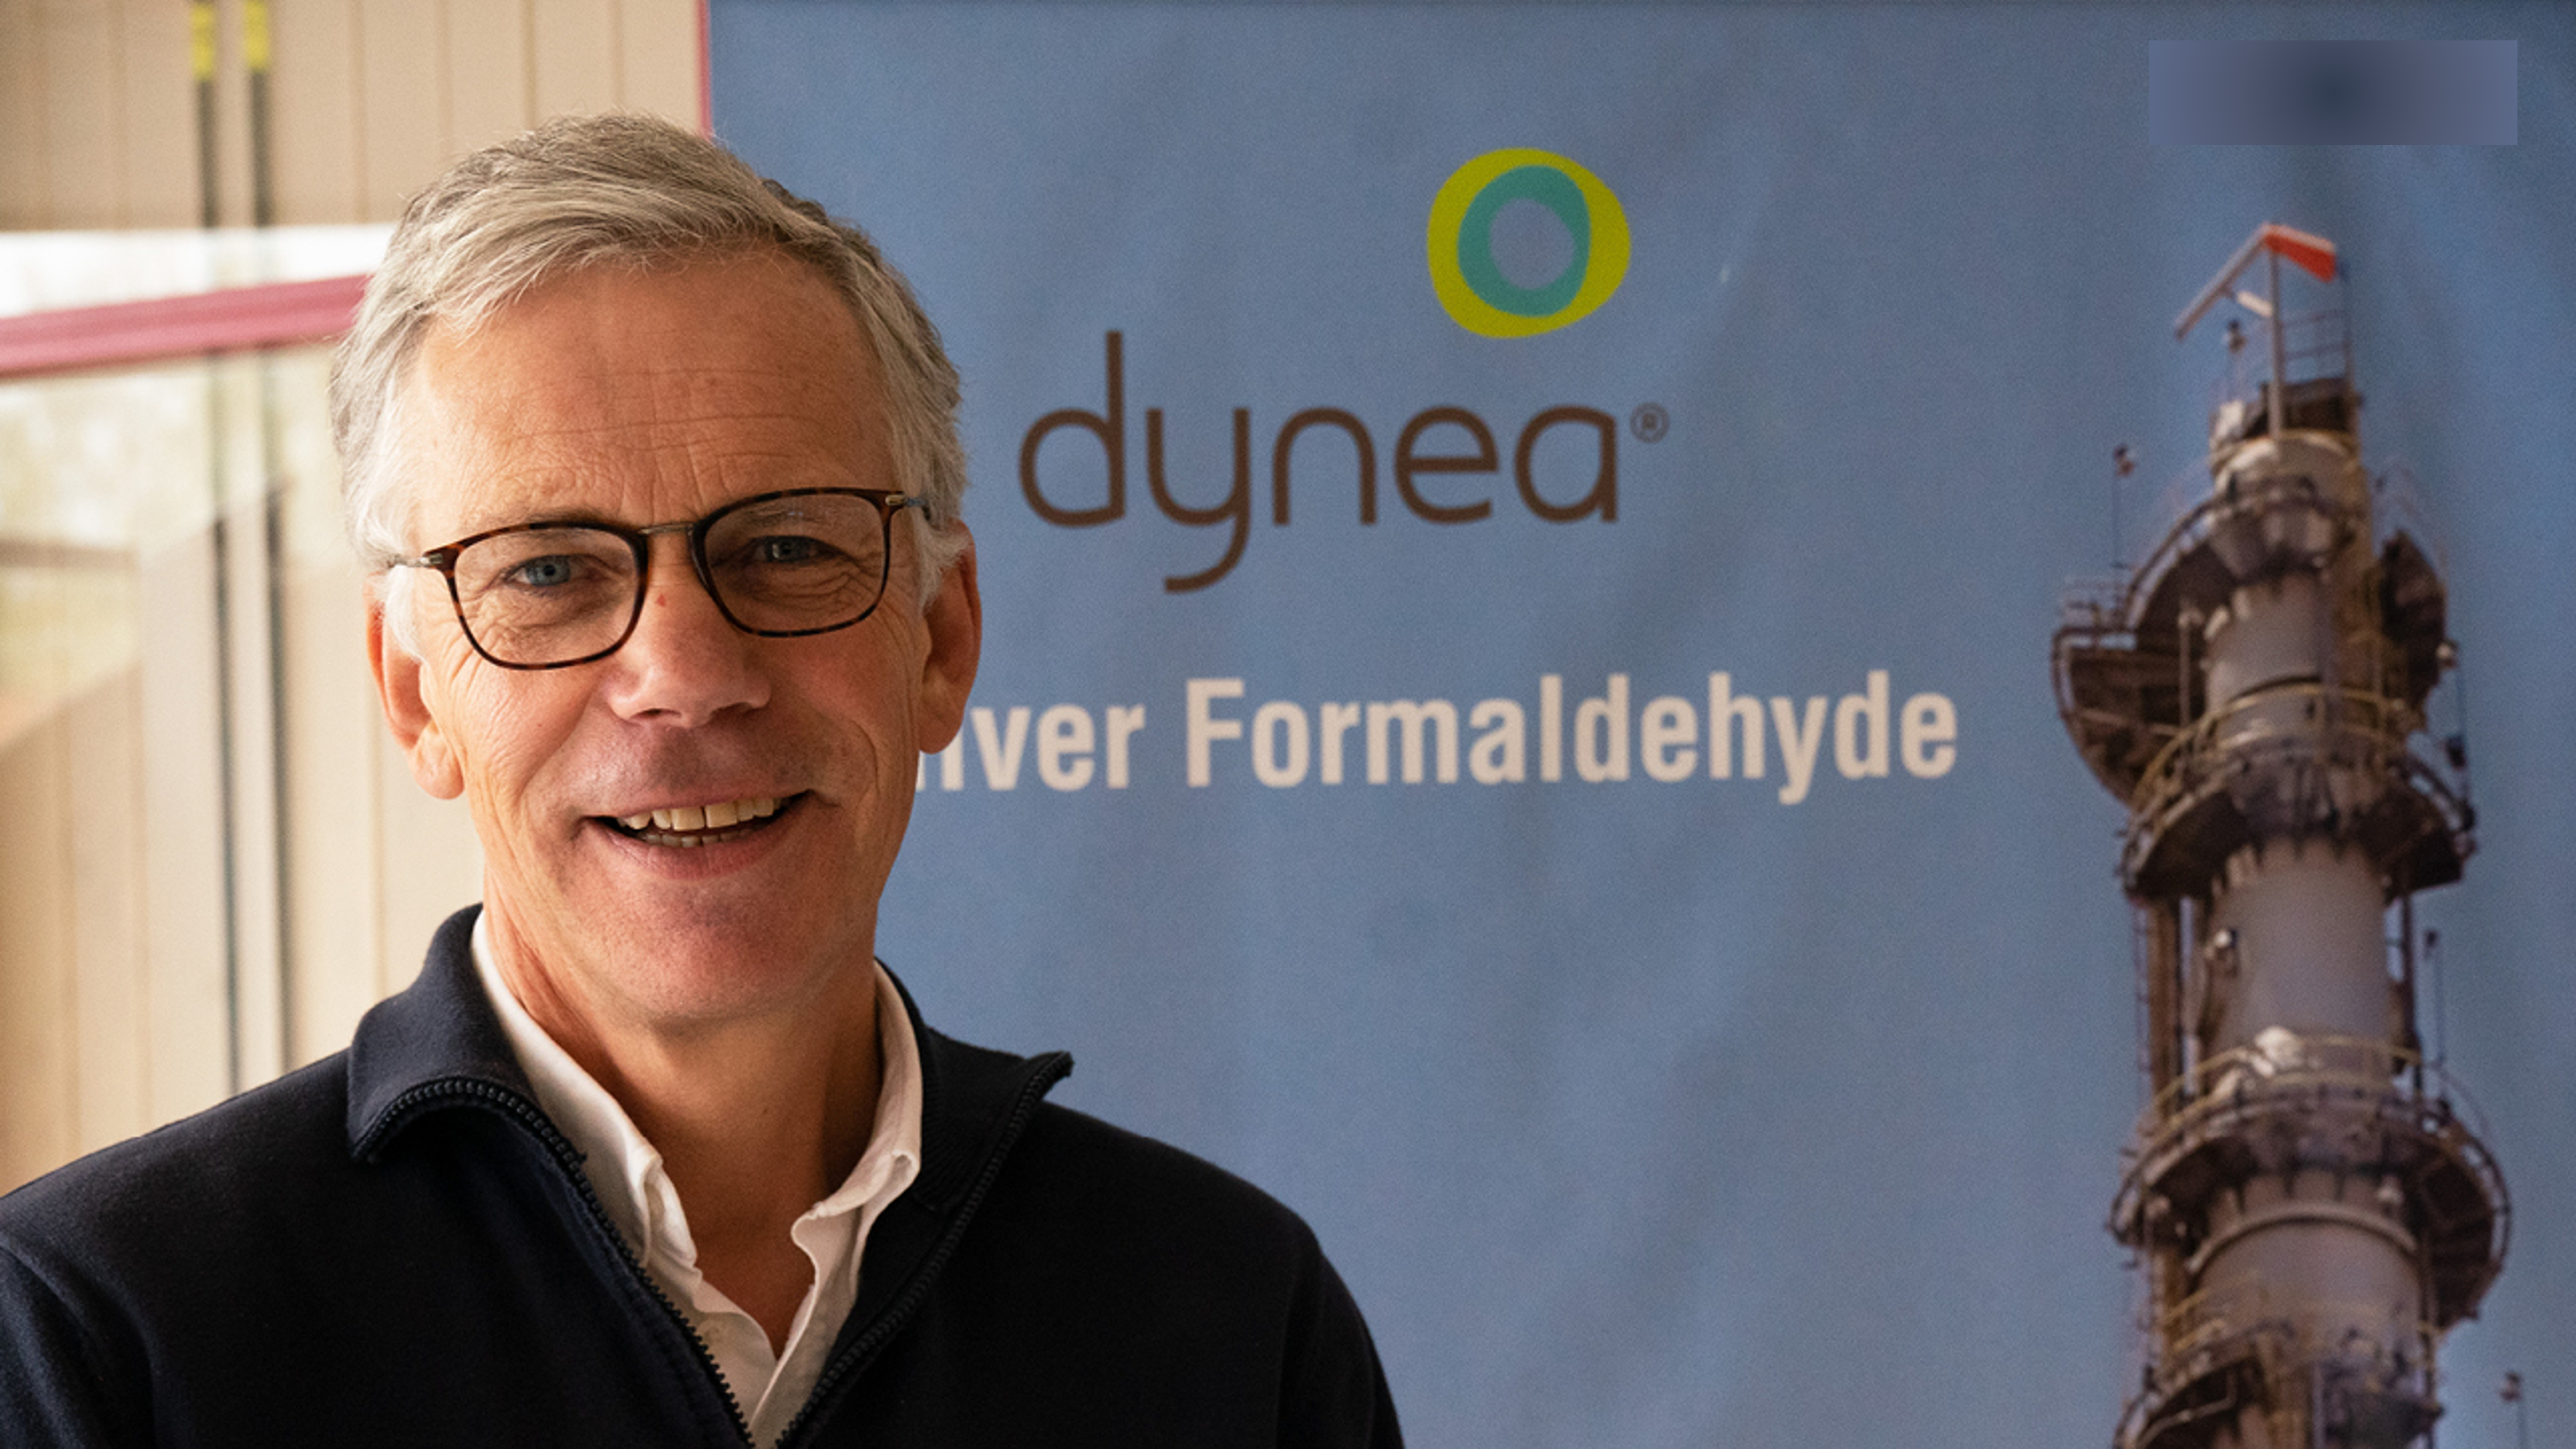 Lars Axelsen from Dynea in front of their farmaldehyd factory